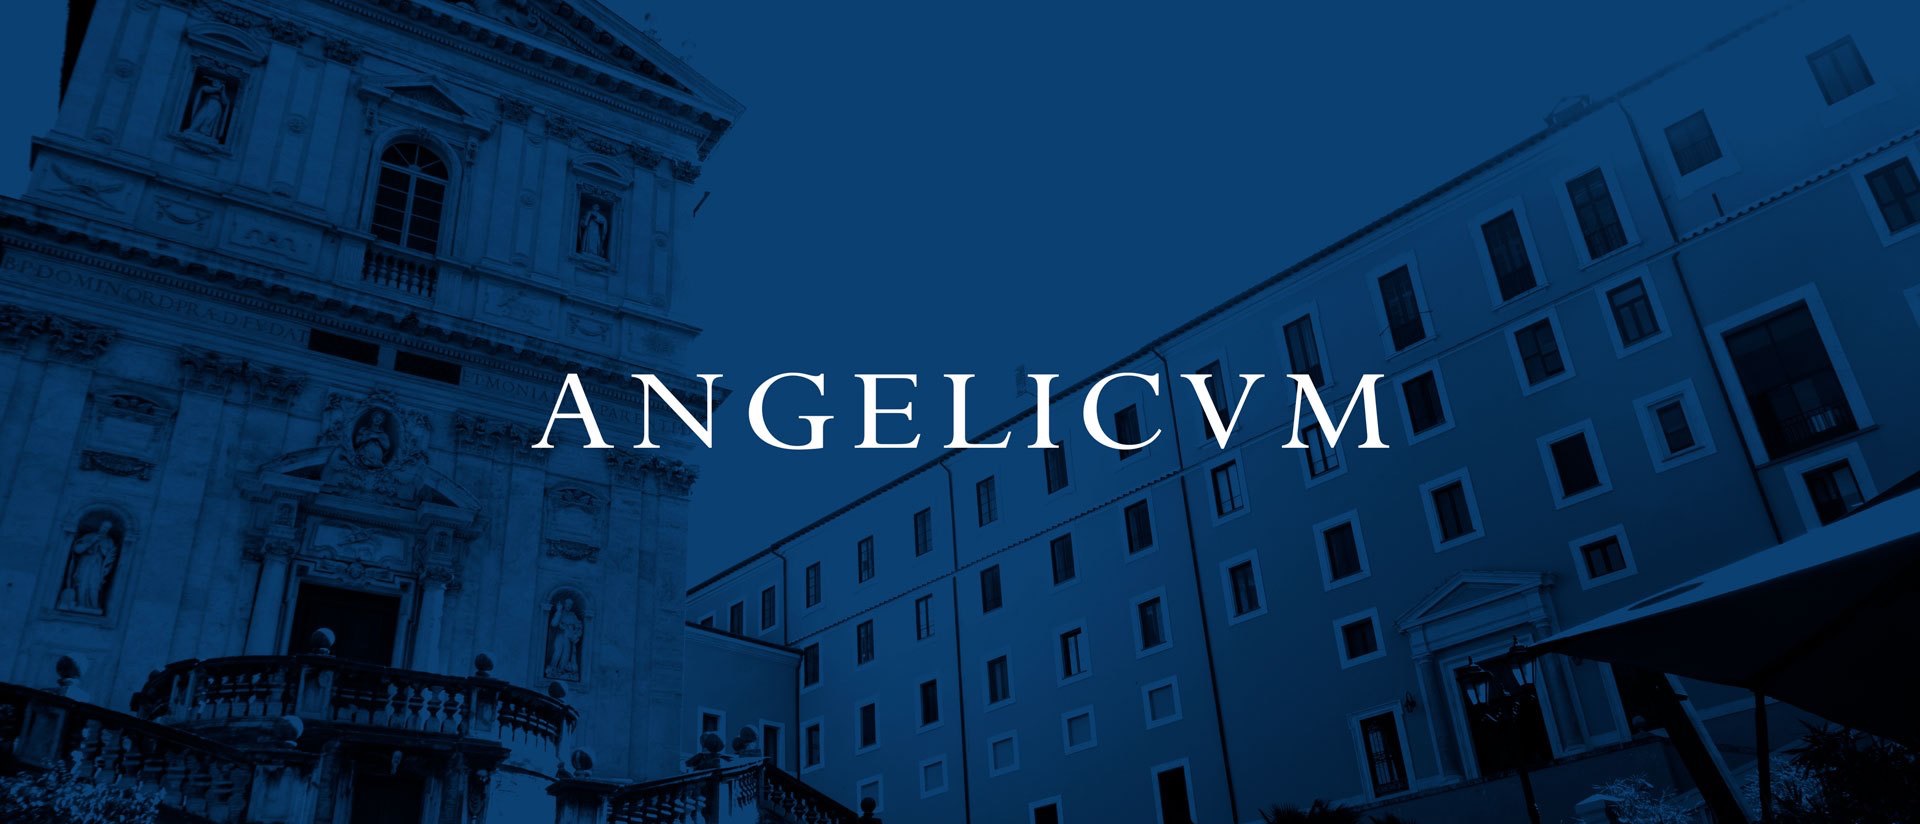 Pontifical University of St. Thomas Aquinas - Angelicum in Roma